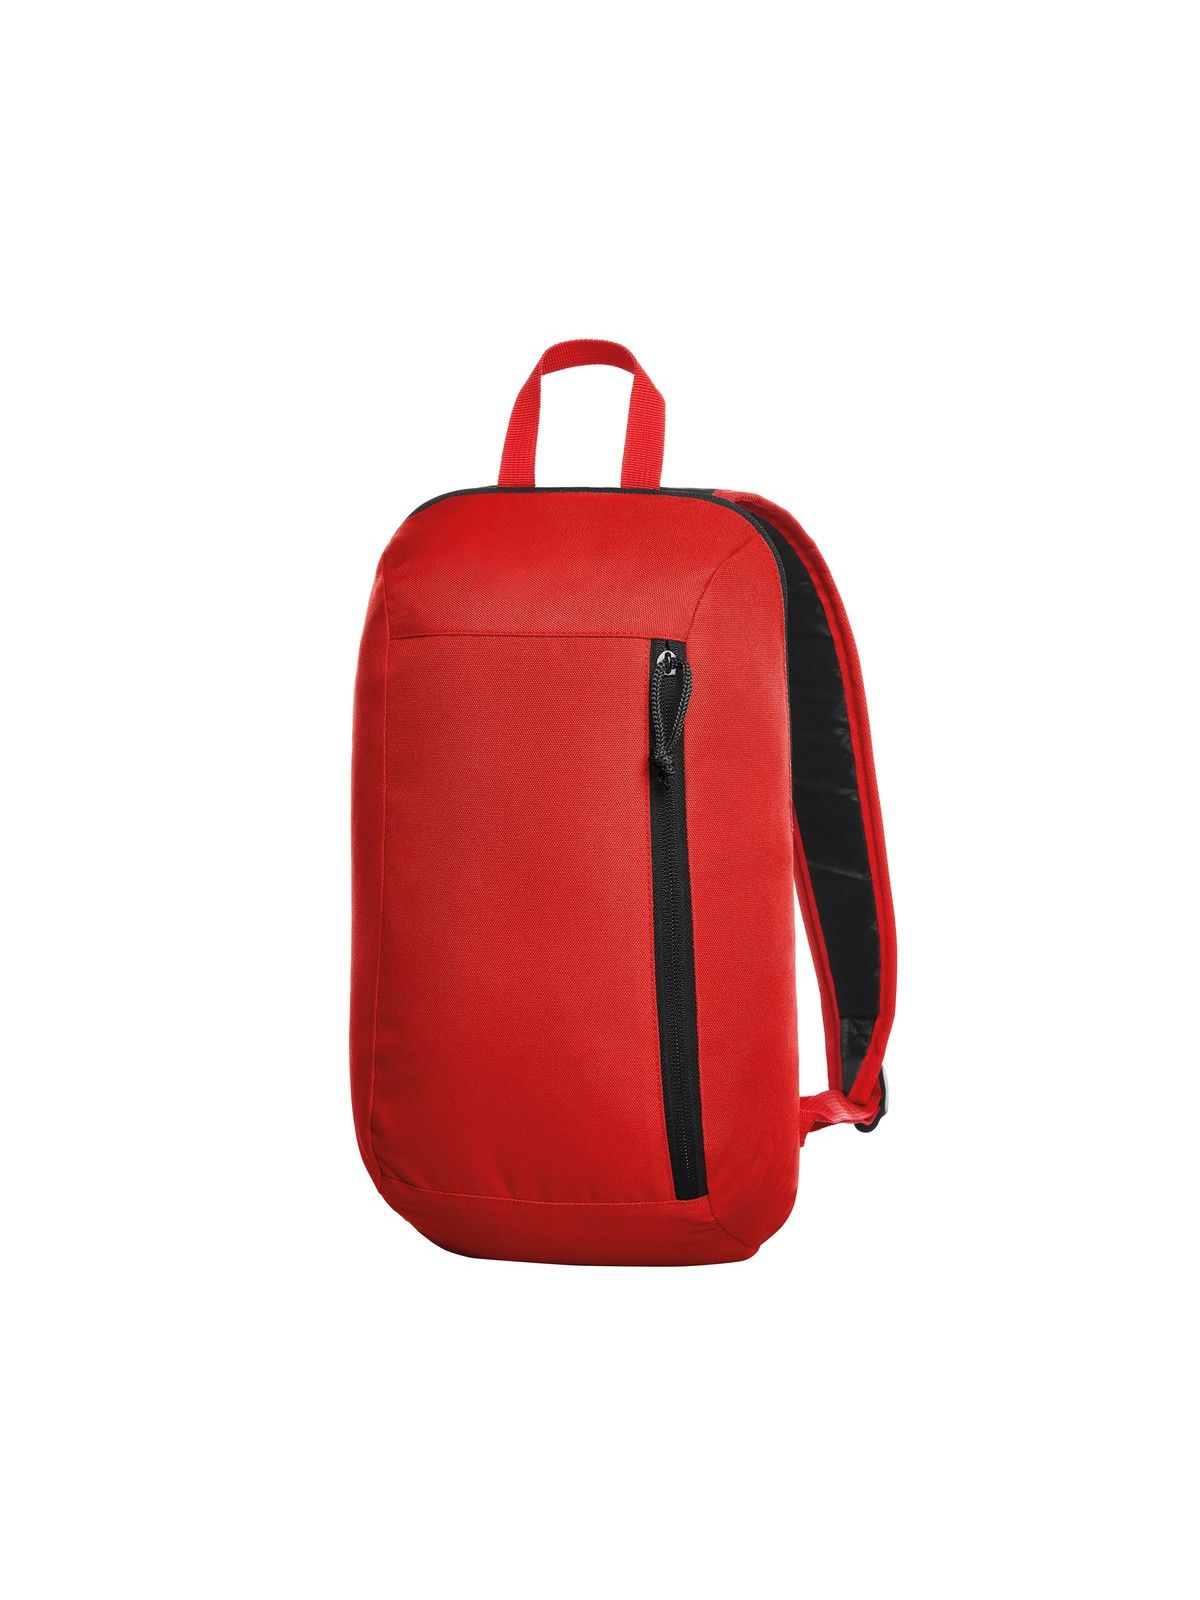 flow-backpack-red.webp